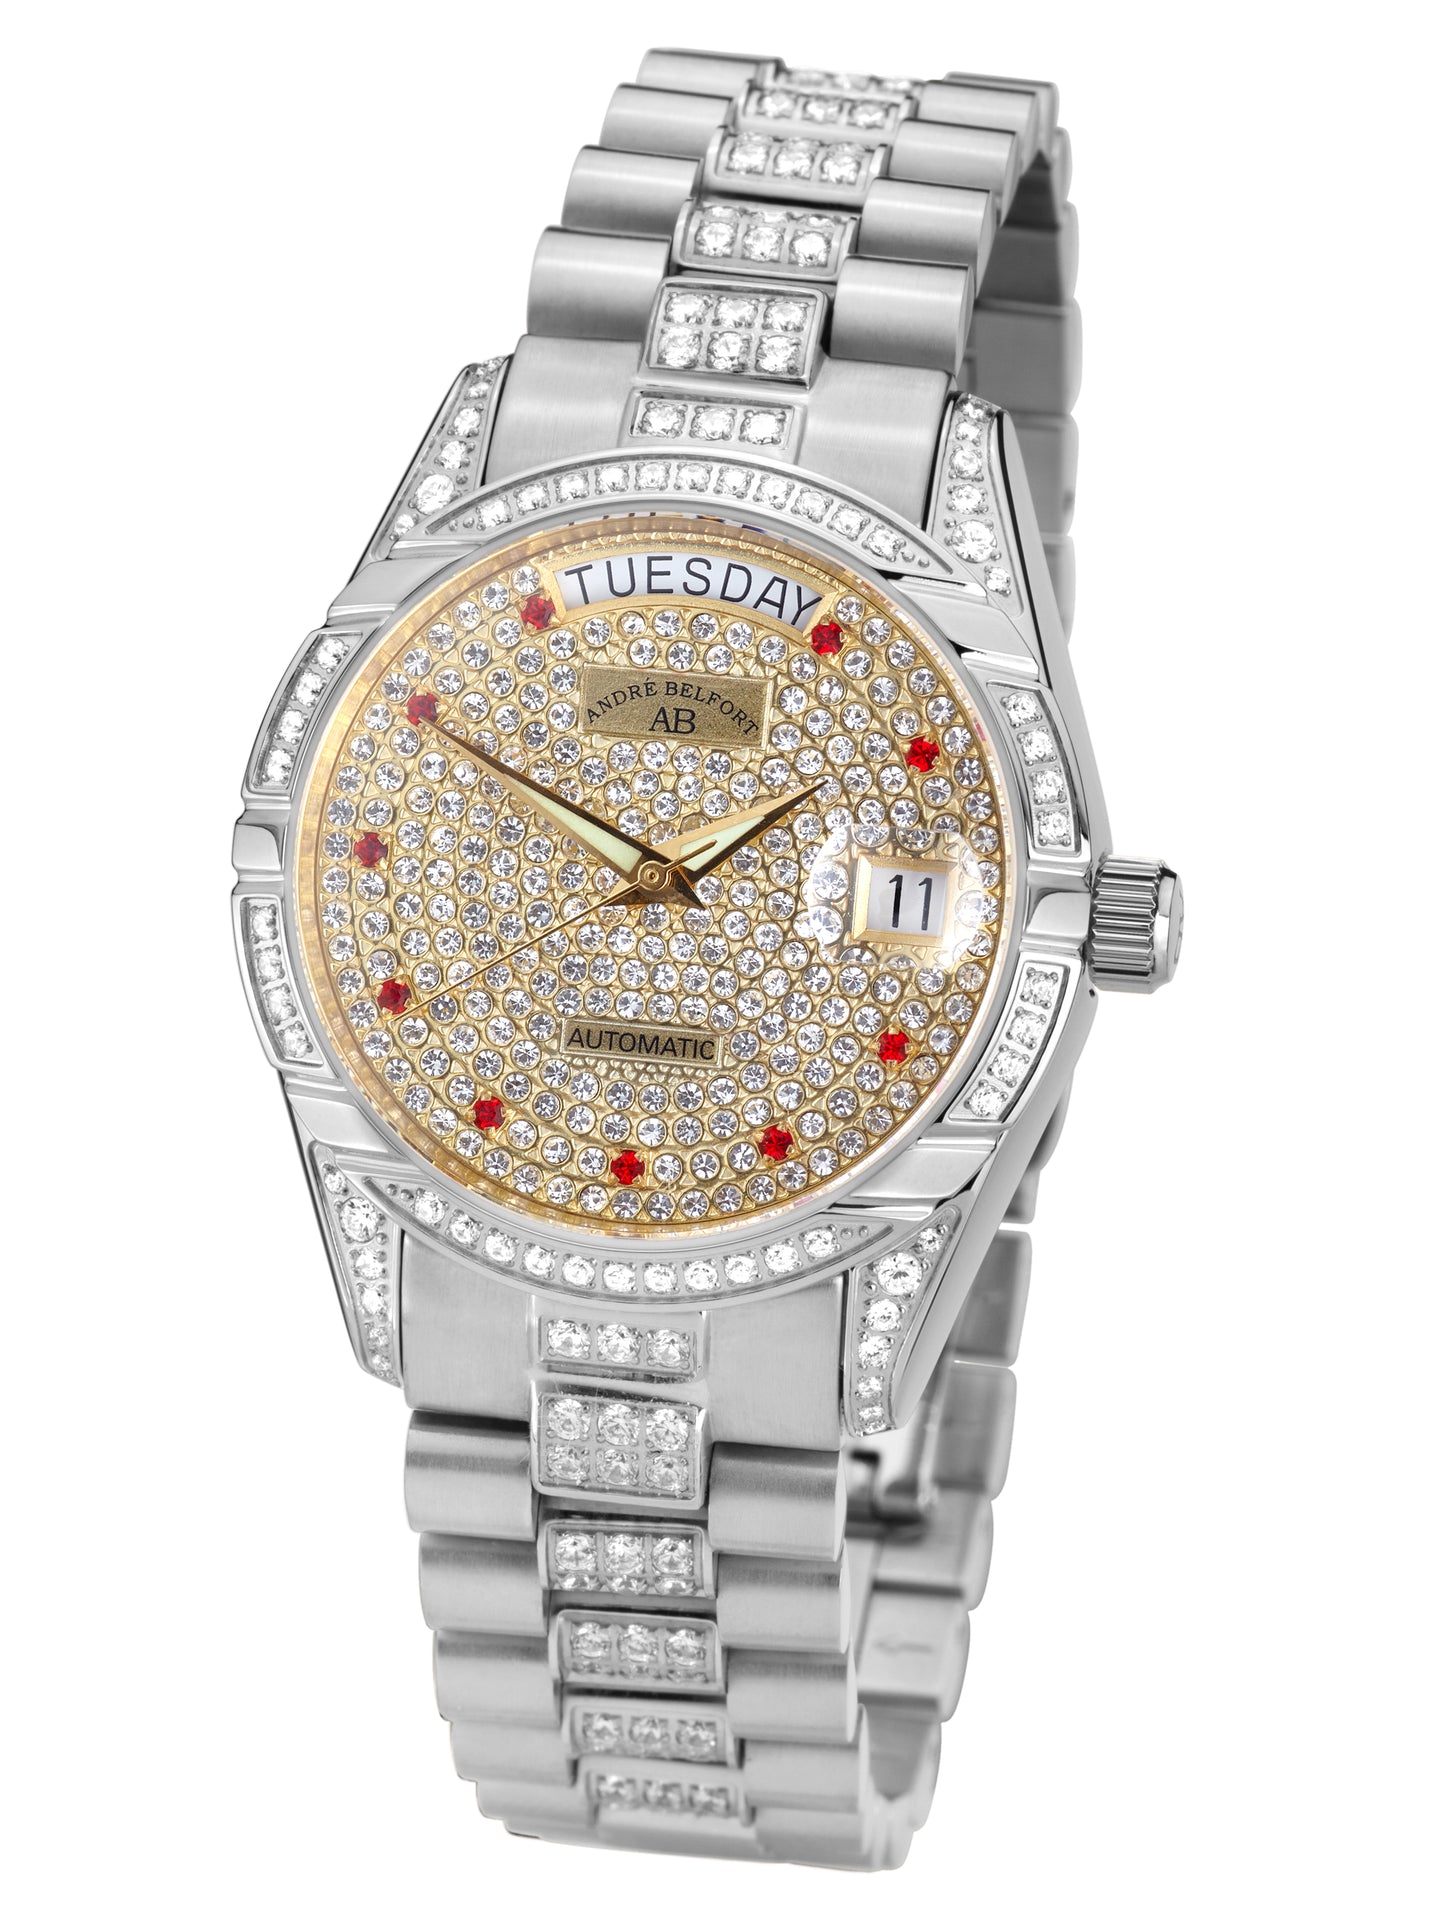 Automatic watches — Comète III — André Belfort — steel gold